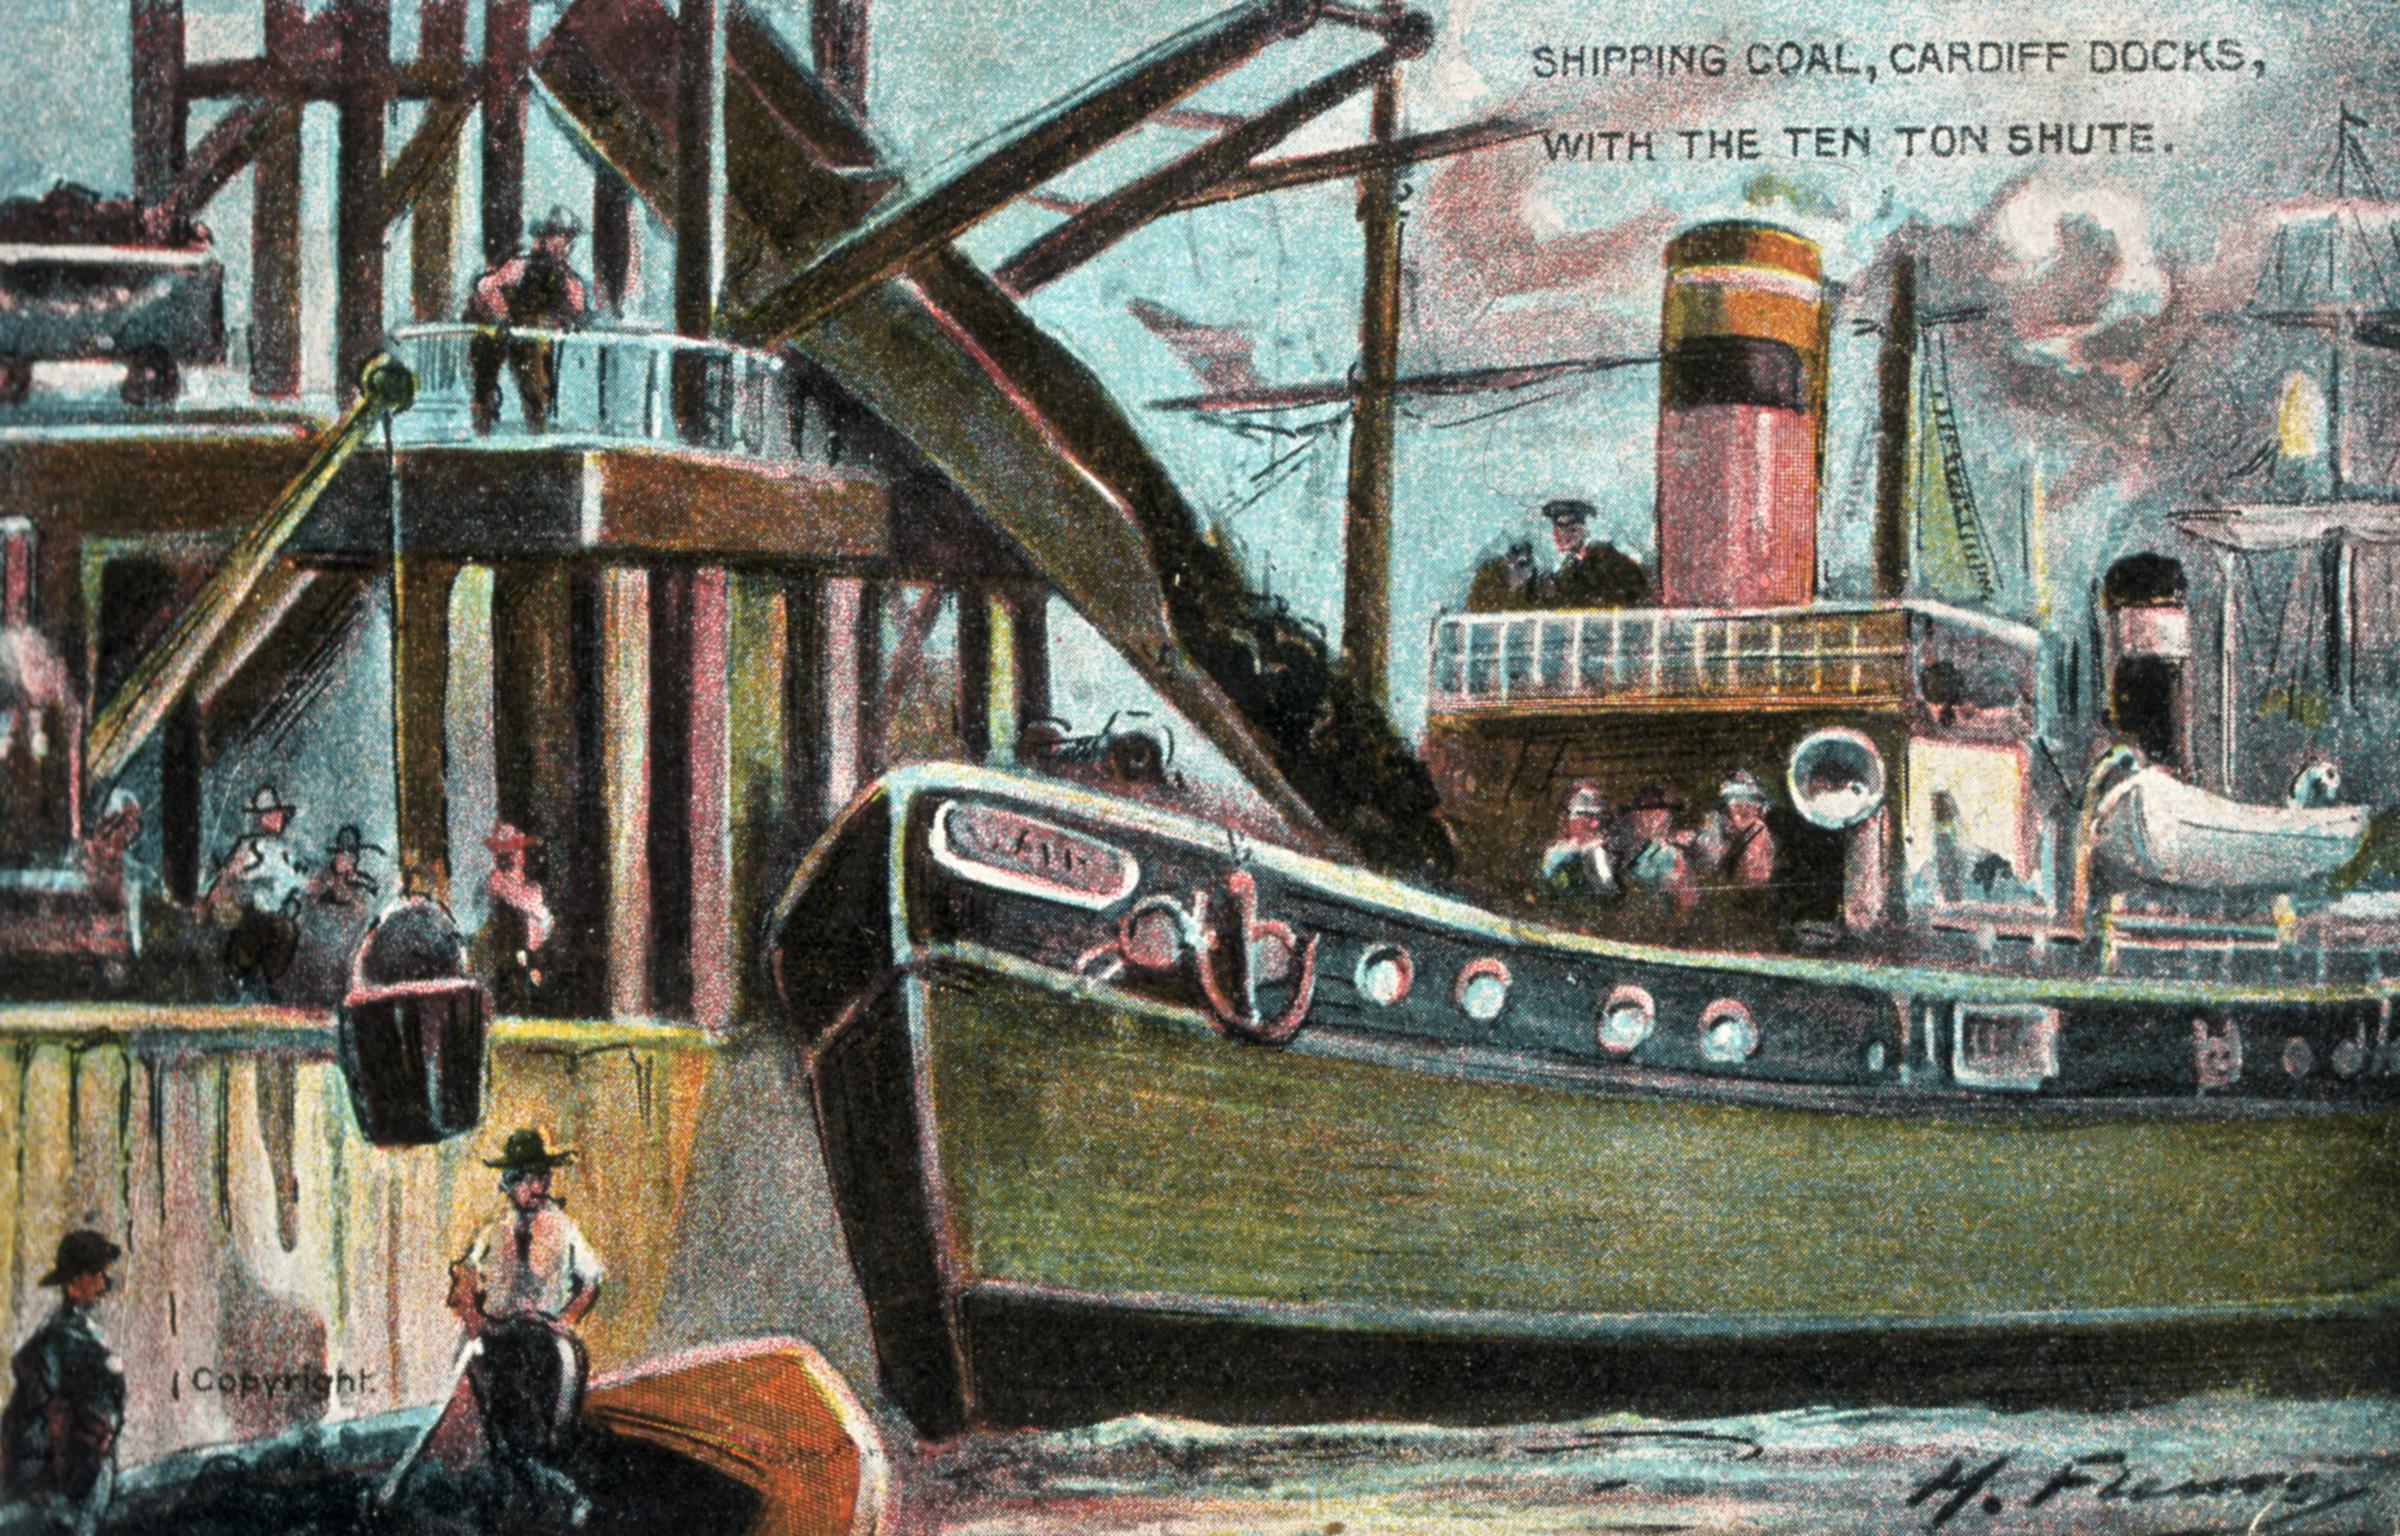 Shipping Coal, Cardiff Docks (postcard)